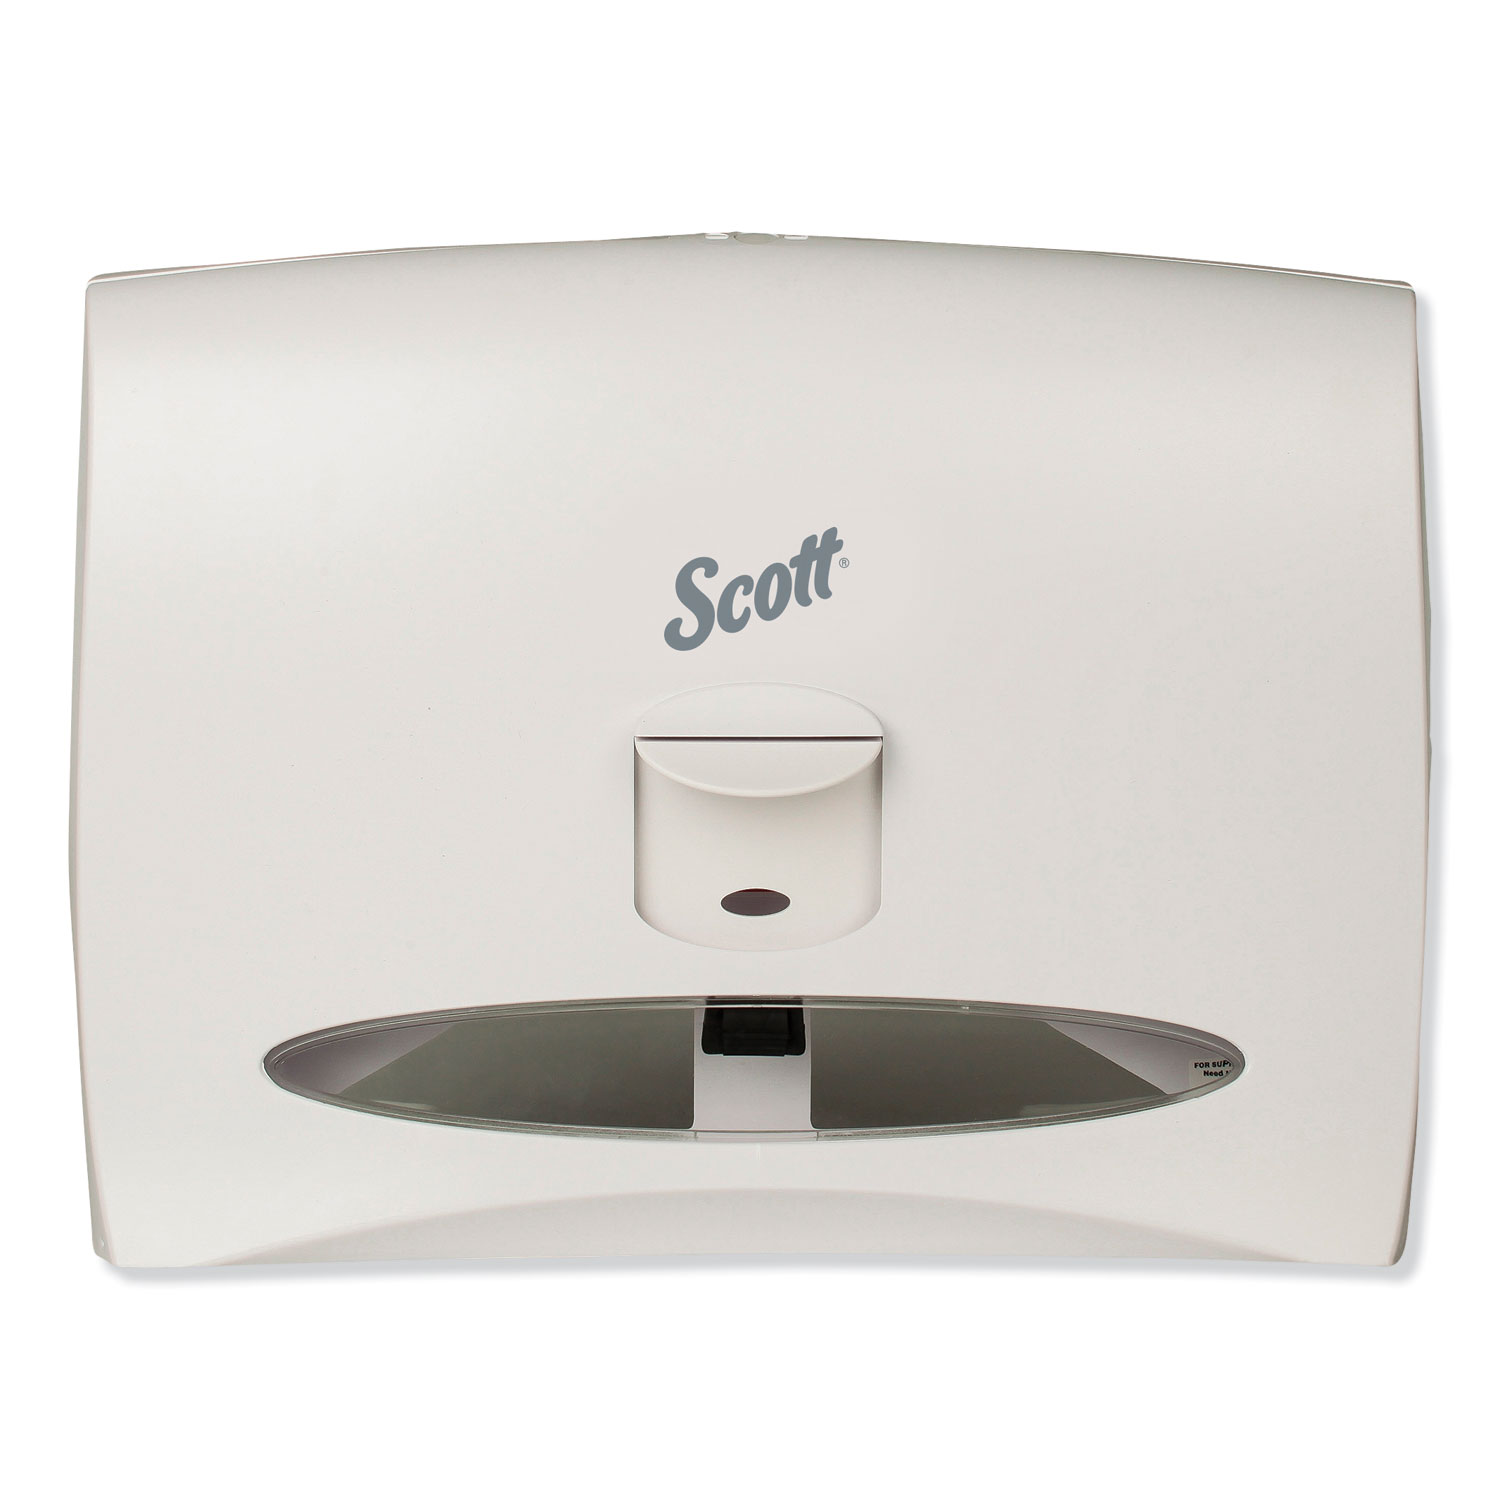  Scott 9505 Personal Seat Toilet Seat Cover Dispenser, 17 1/2 x 2 1/4 x 13 1/4, White (KCC09505) 